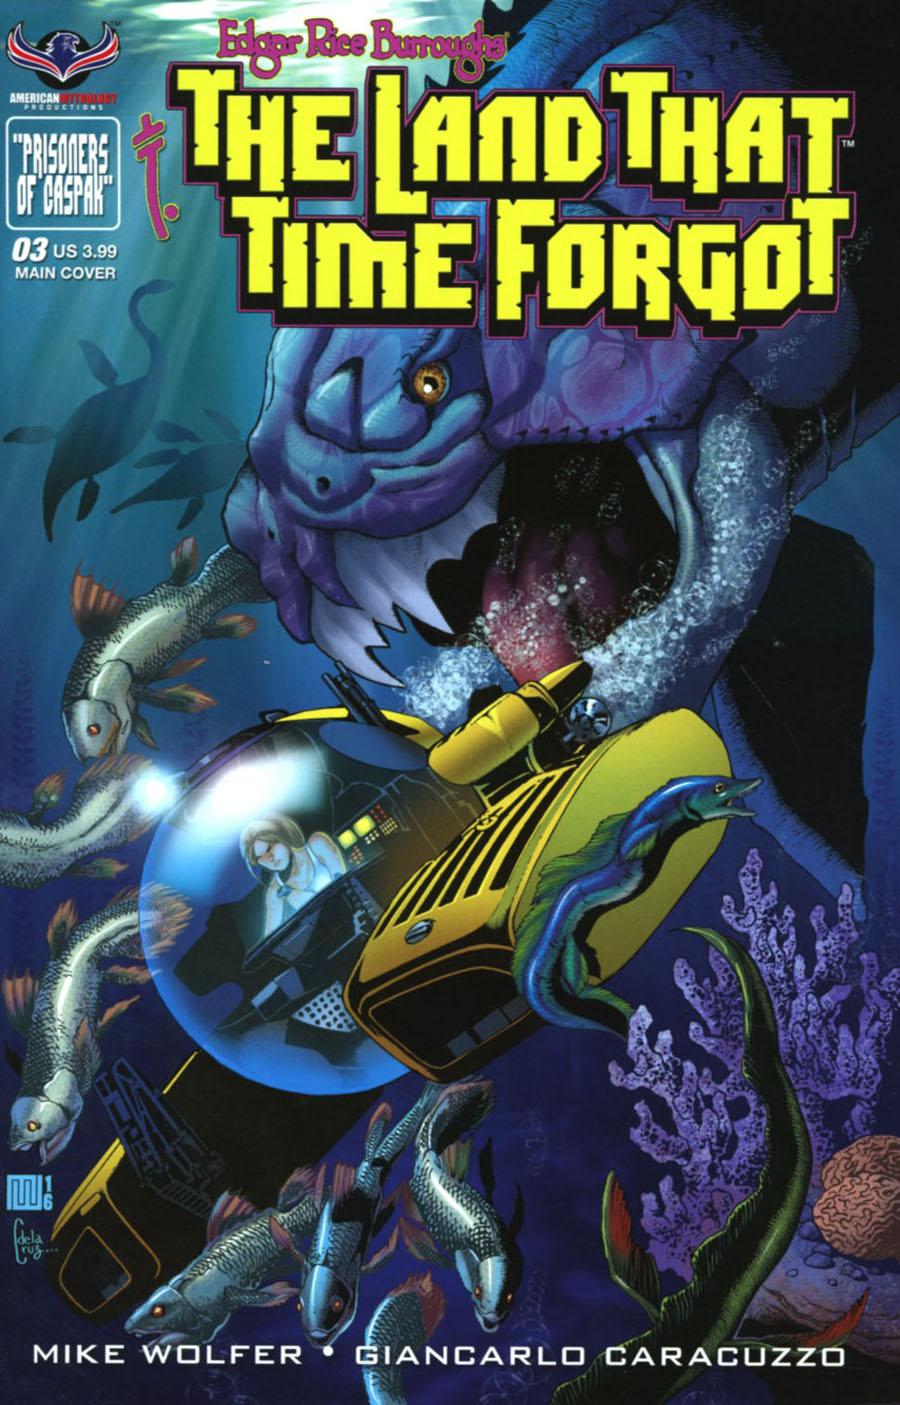 Edgar Rice Burroughs Land That Time Forgot Vol. 1 #3